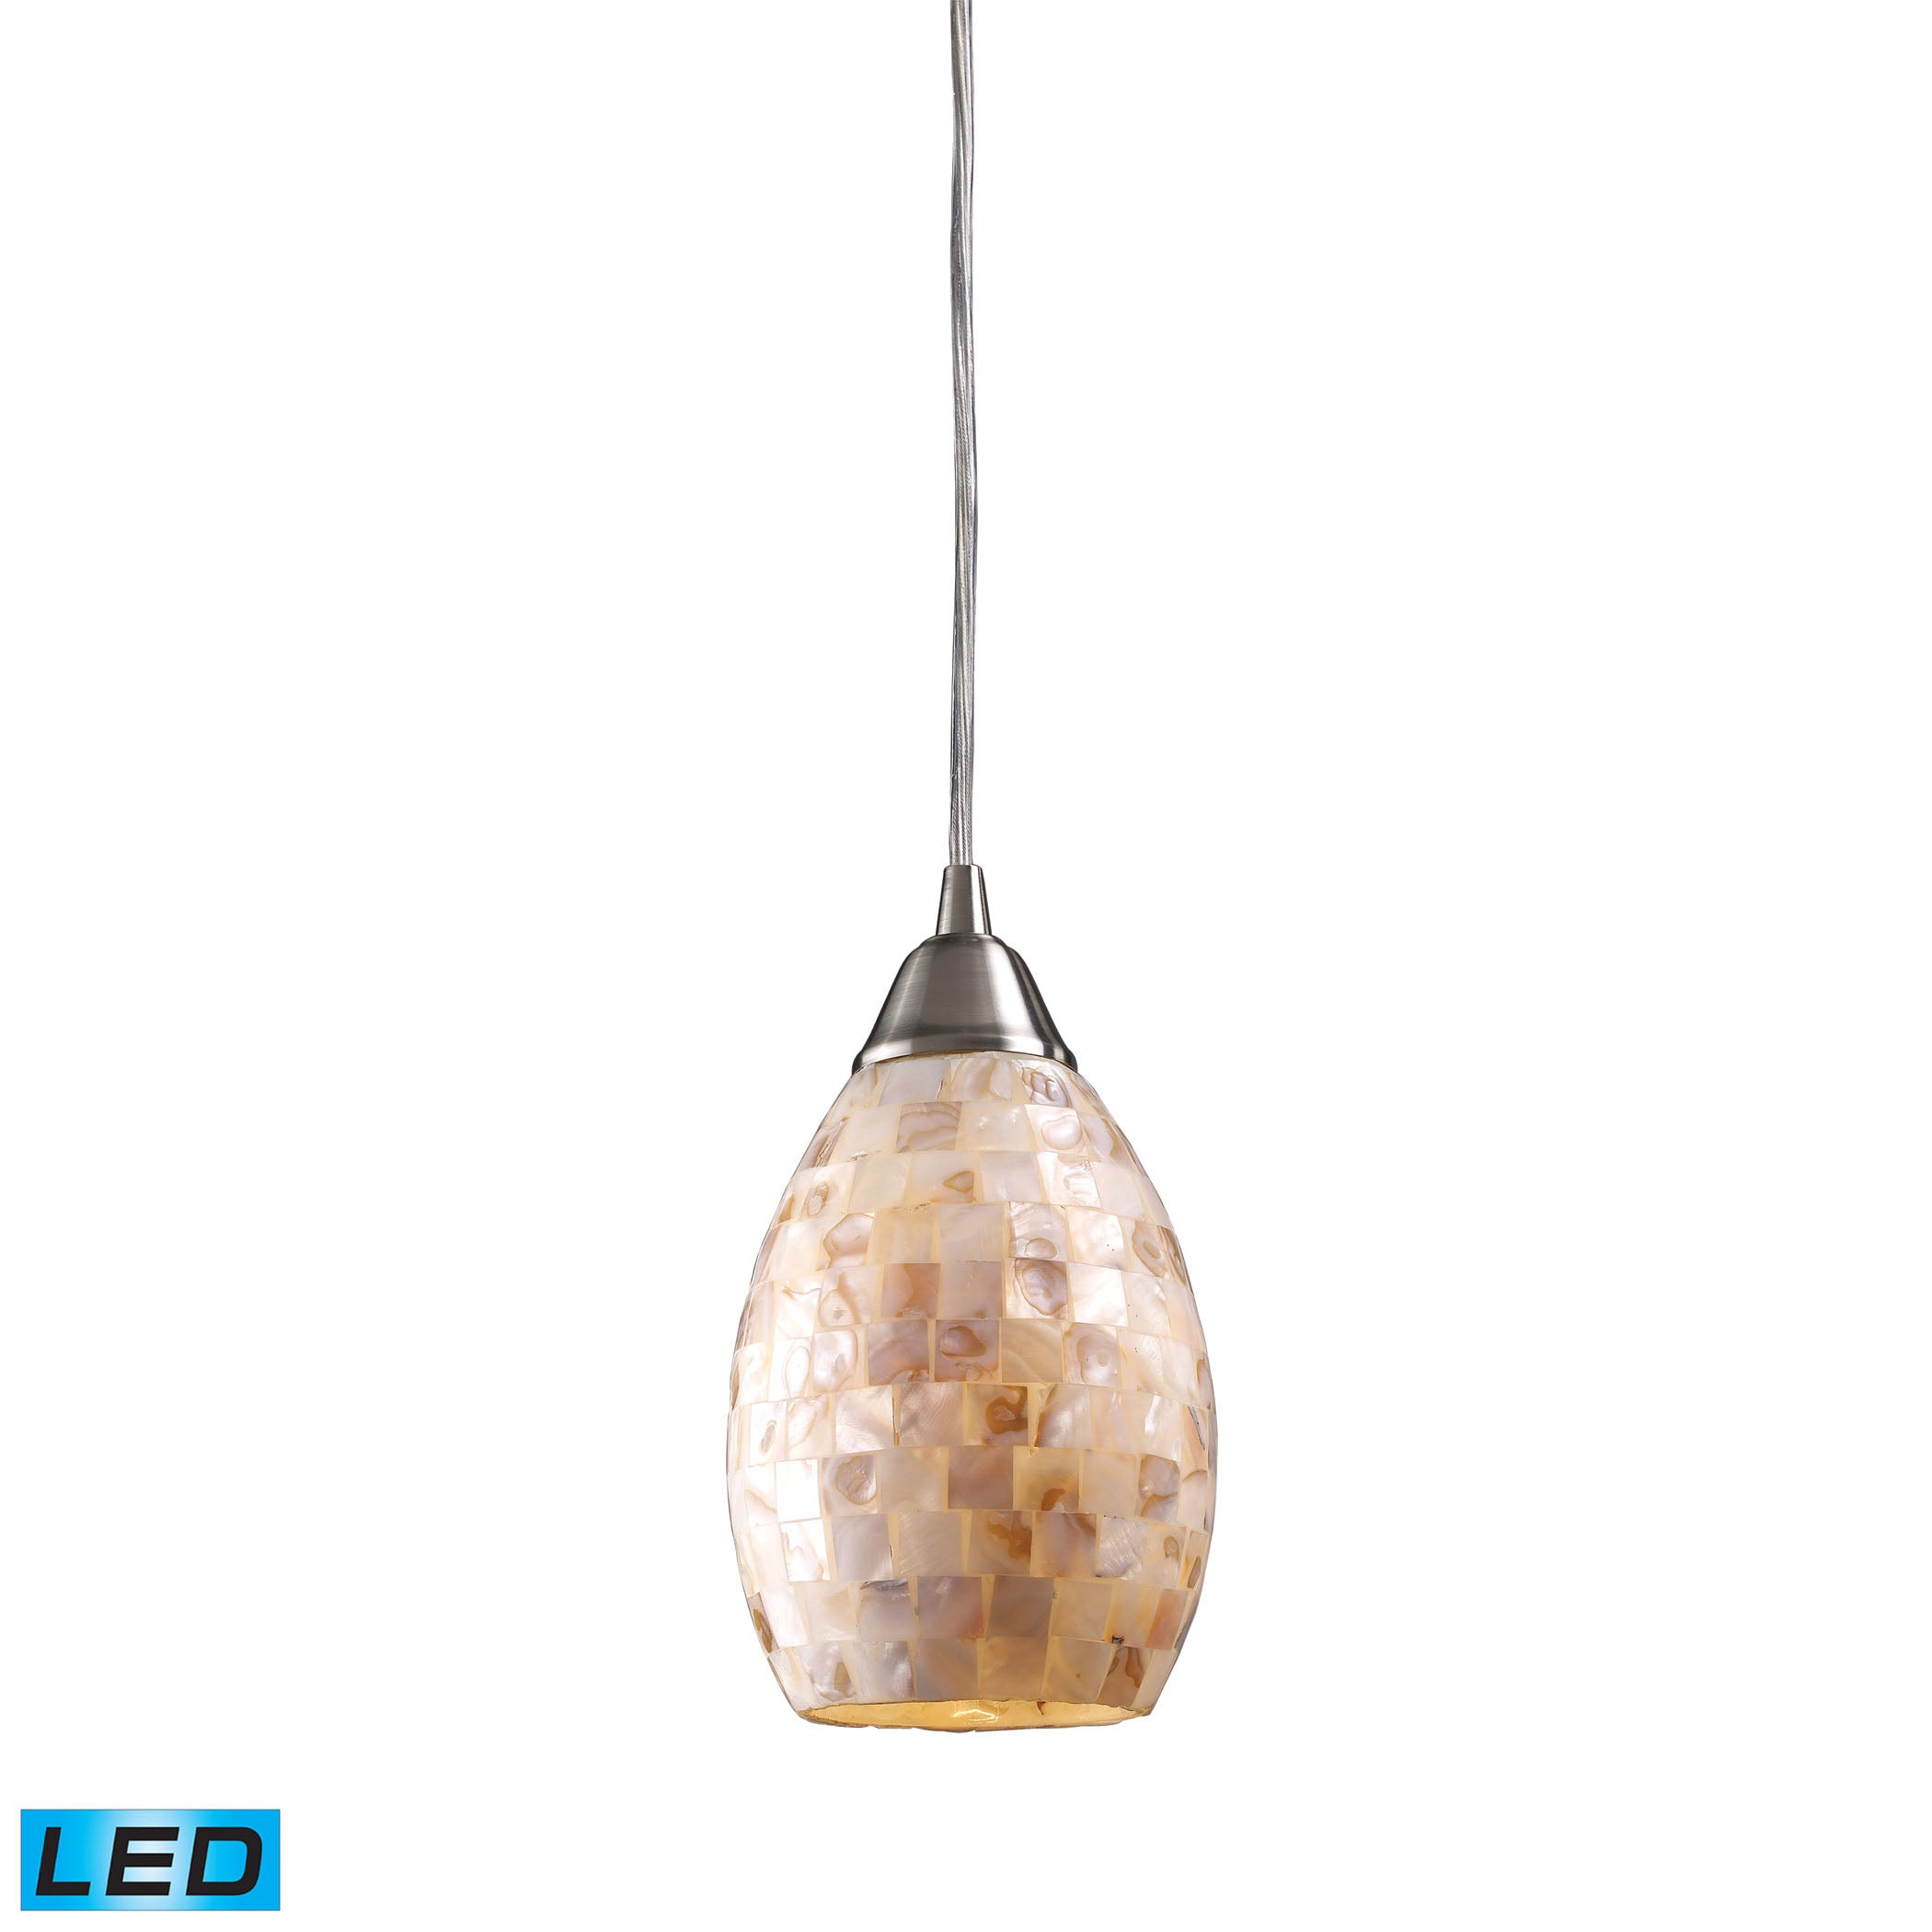 ELK Lighting 10141/1-LED Capri 1-Light Mini Pendant in Satin Nickel with Capiz Shell Glass - Includes LED Bulb